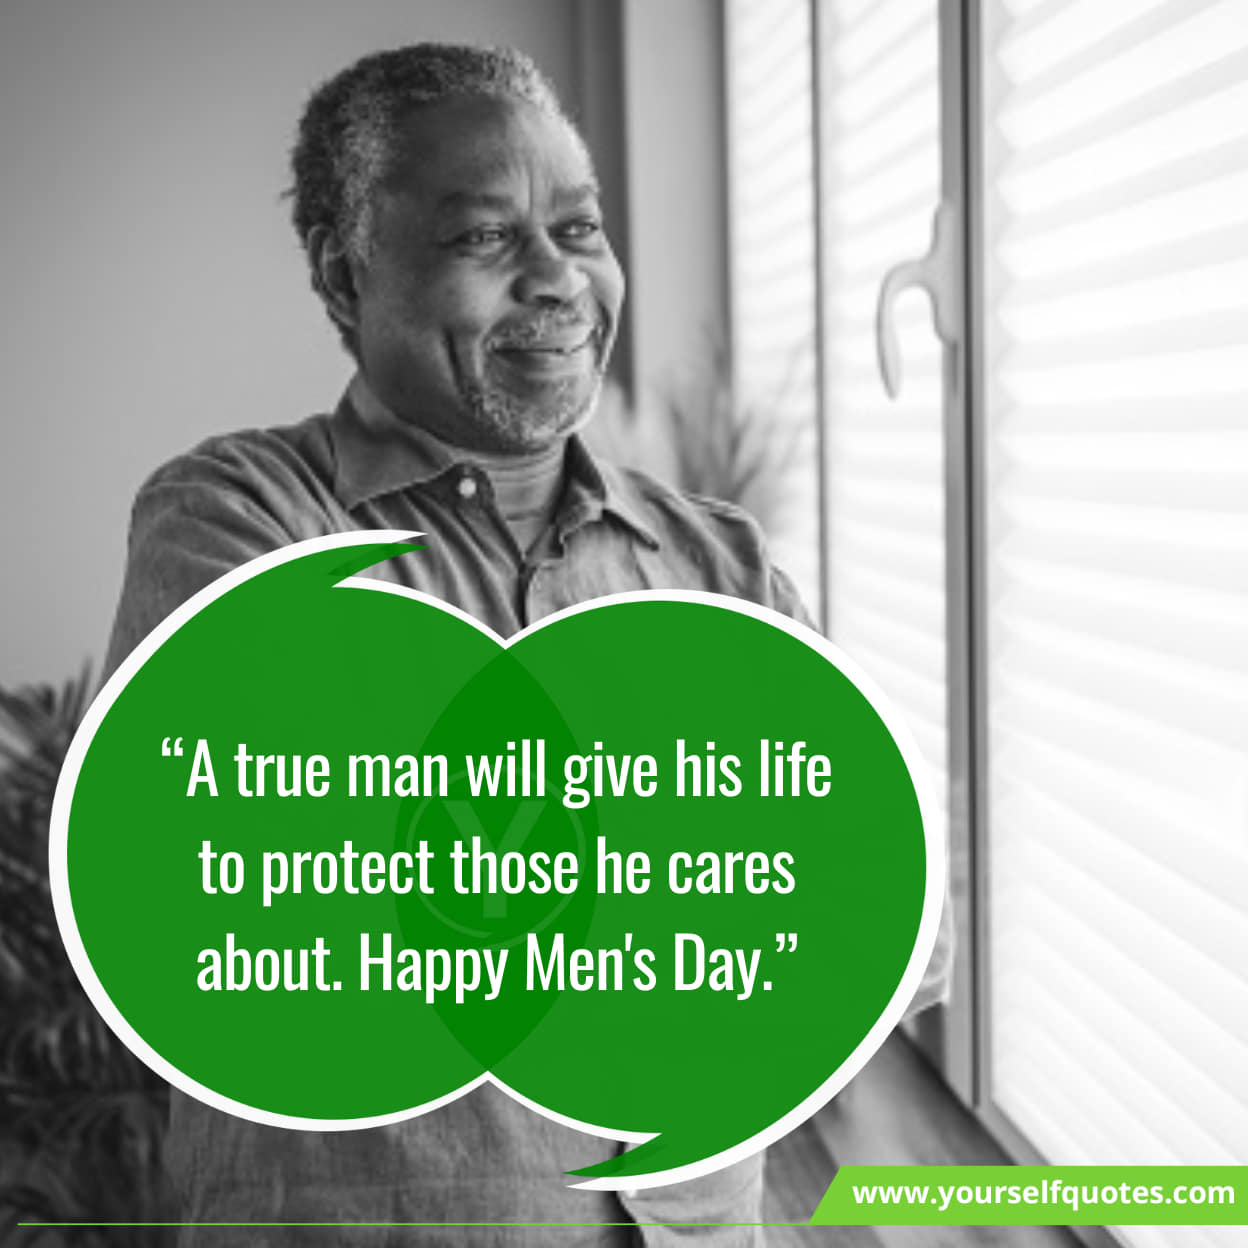 Inspiring Quotes On Happy Men’s Day